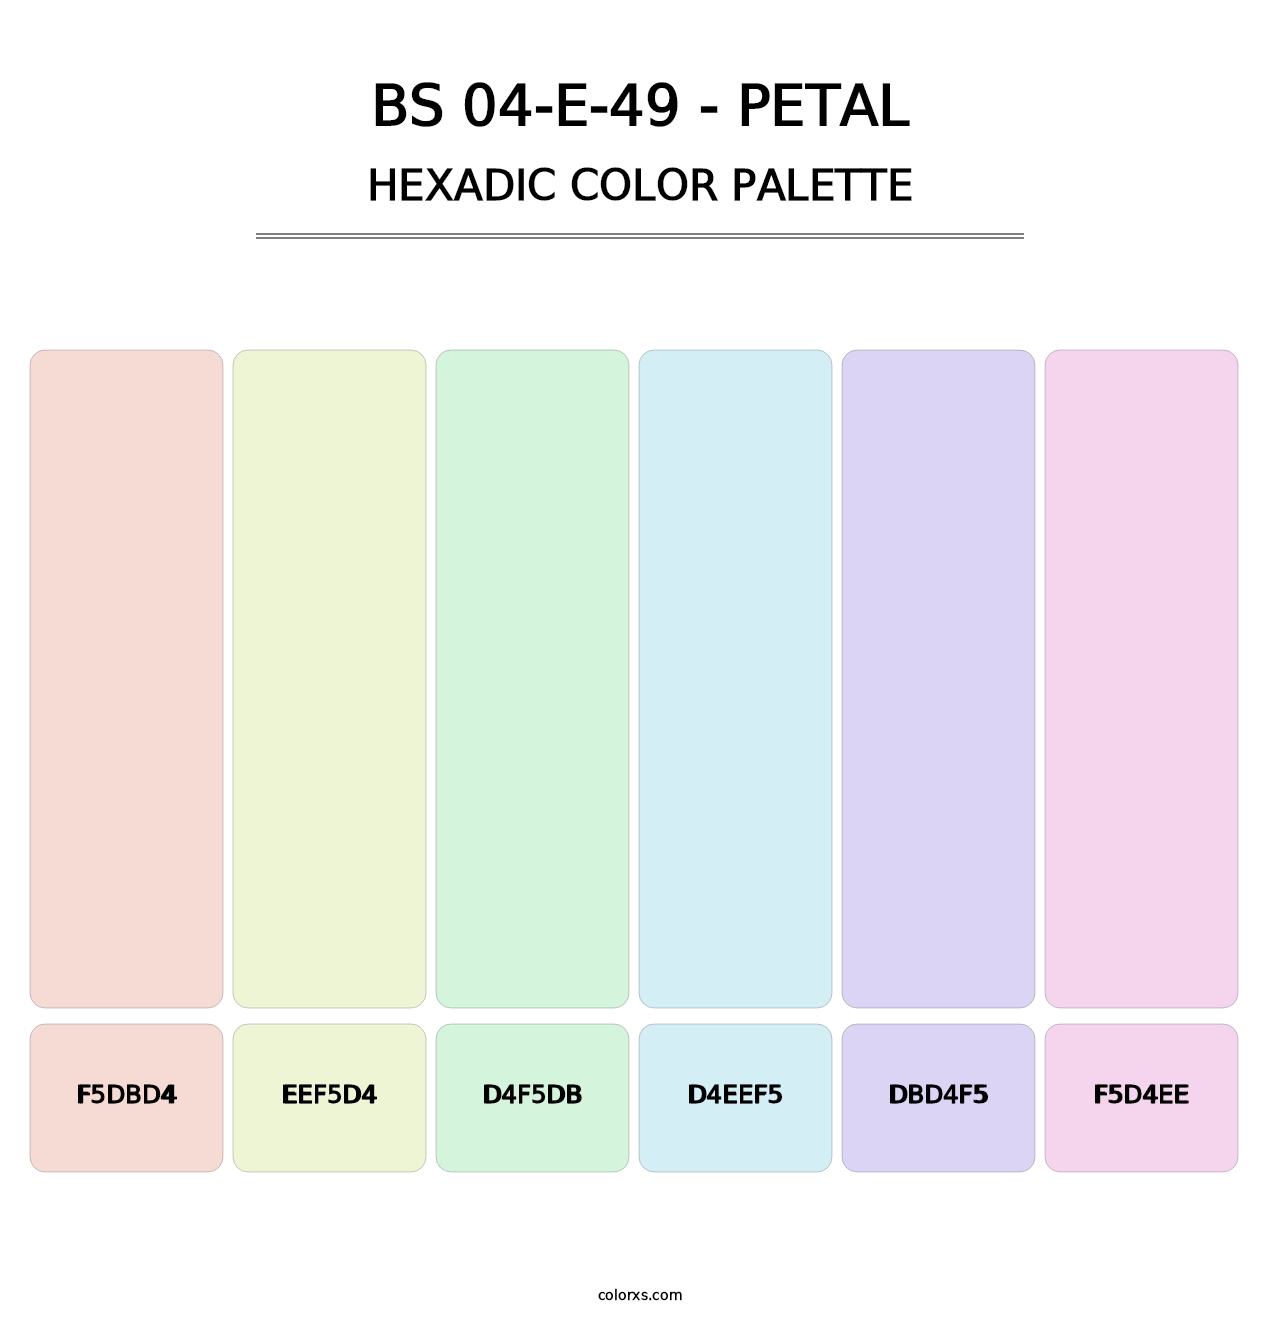 BS 04-E-49 - Petal - Hexadic Color Palette